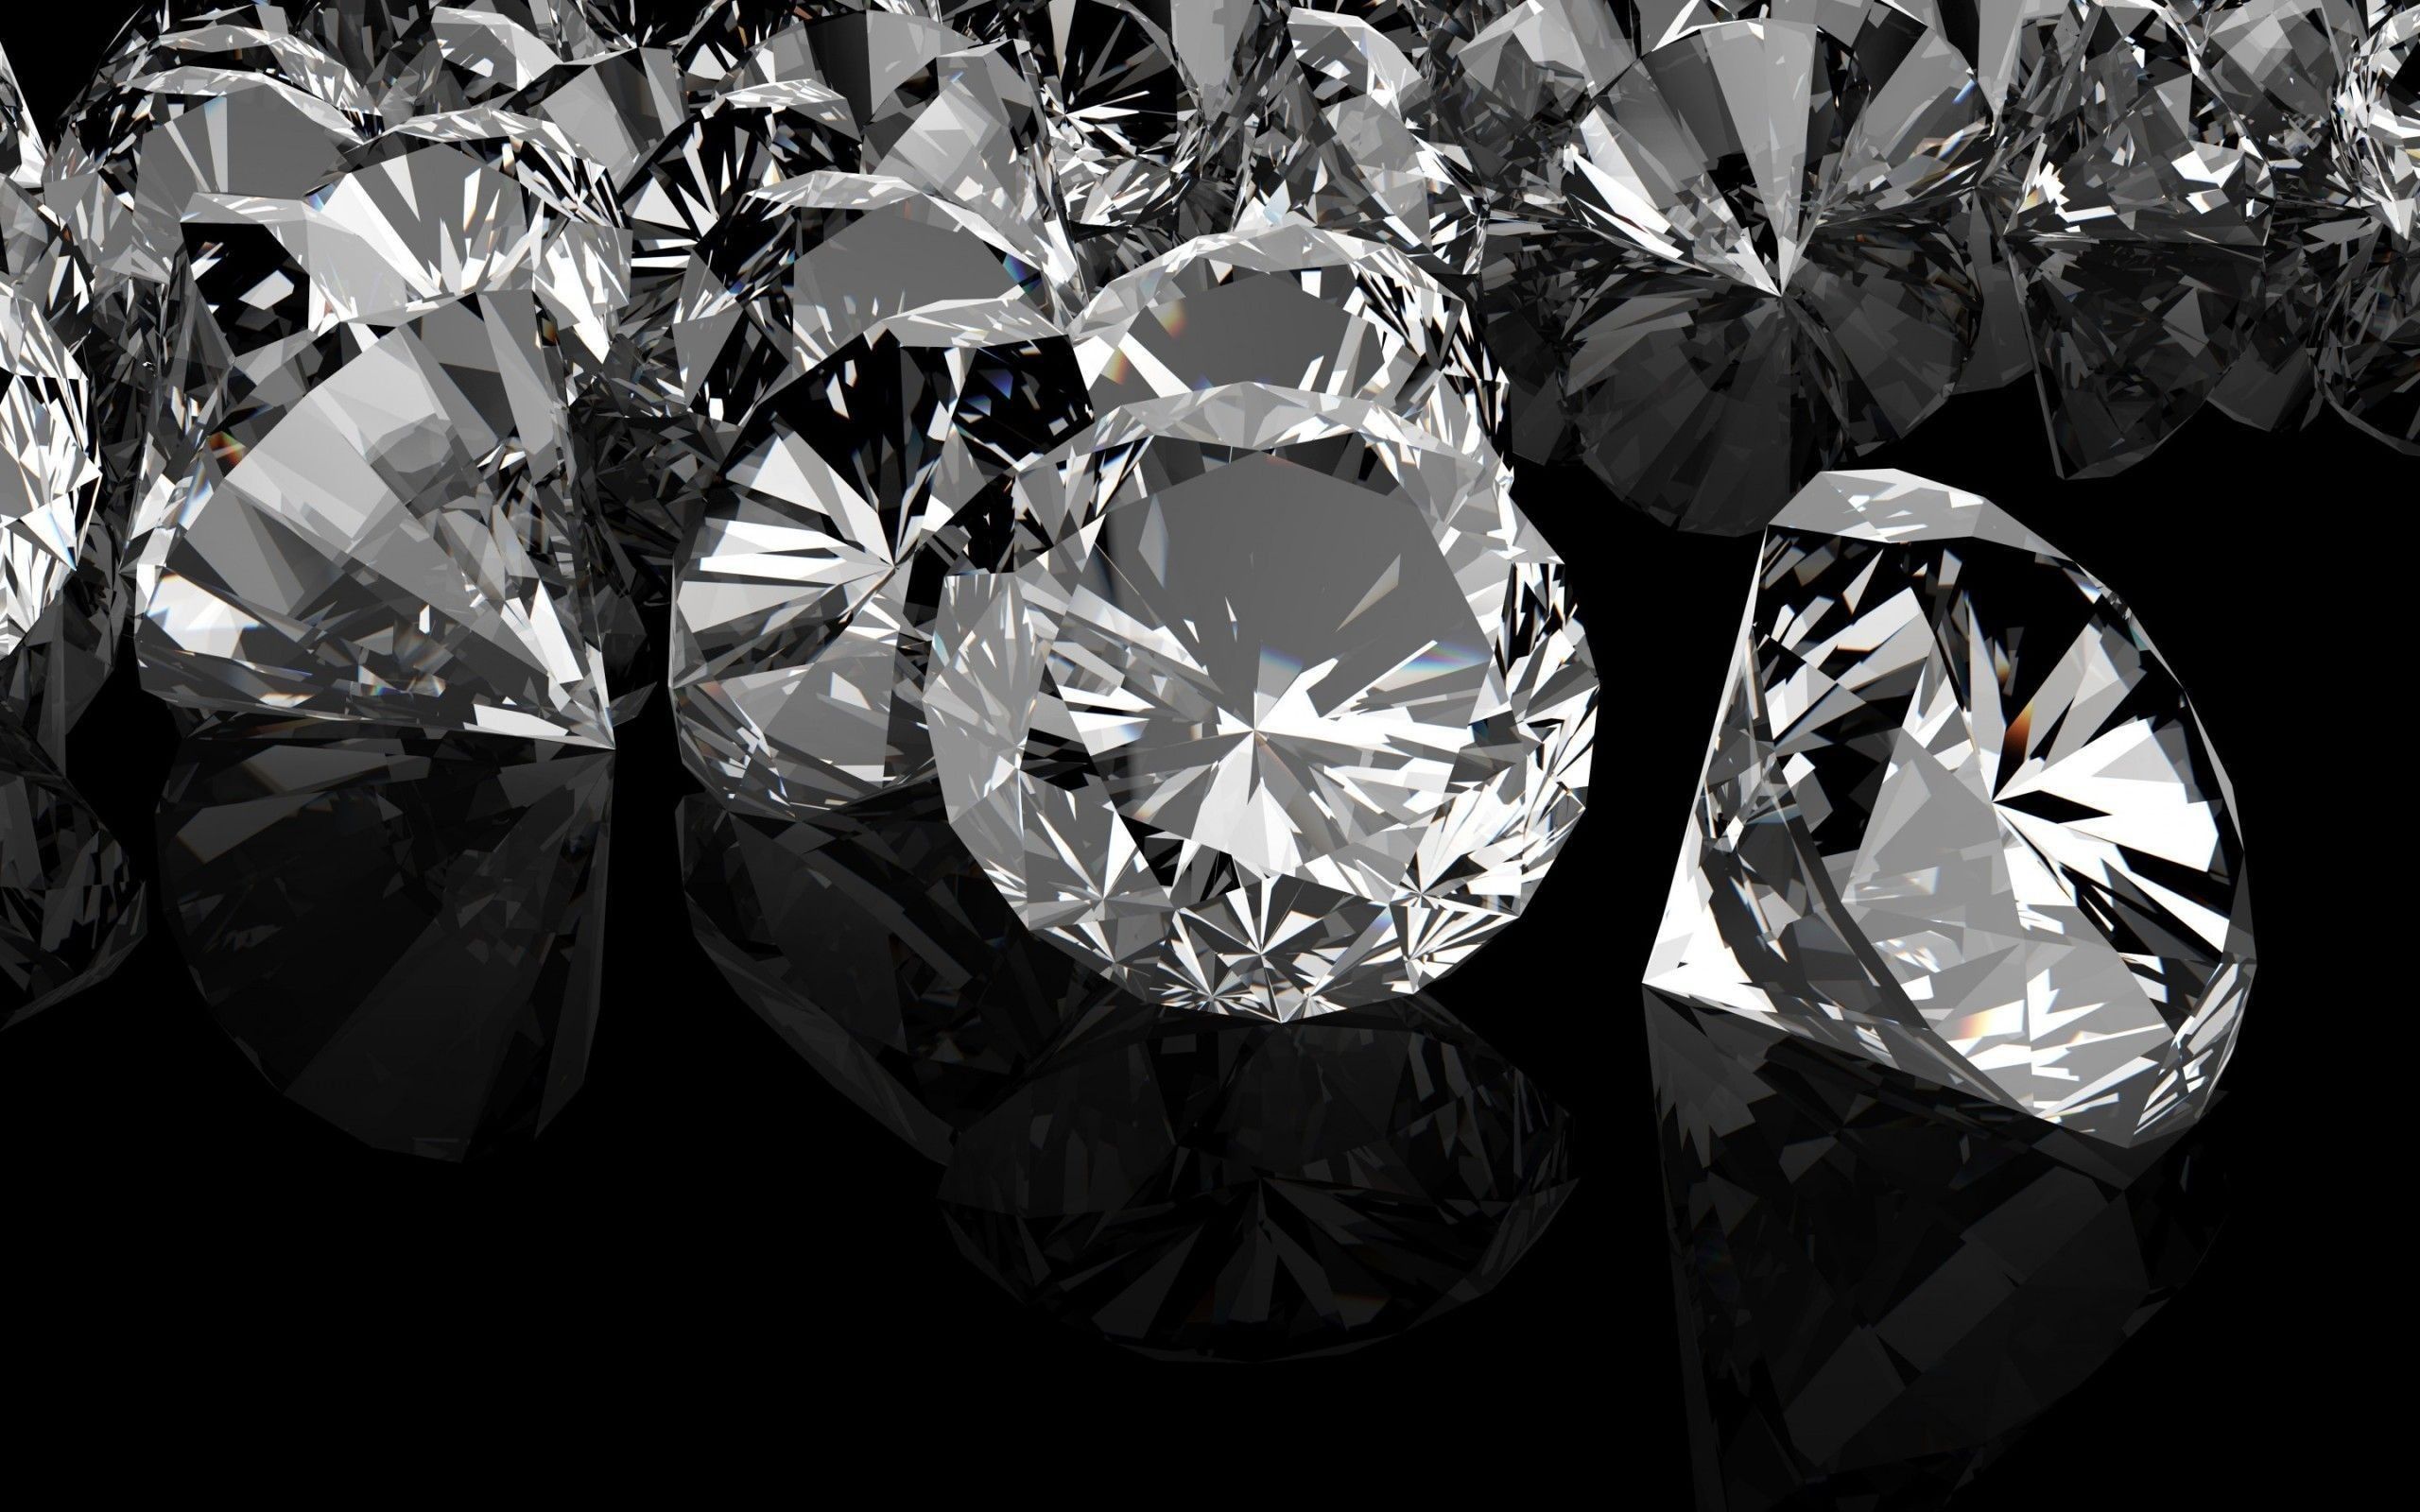 Fondos de pantalla de diamantes - FondosMil